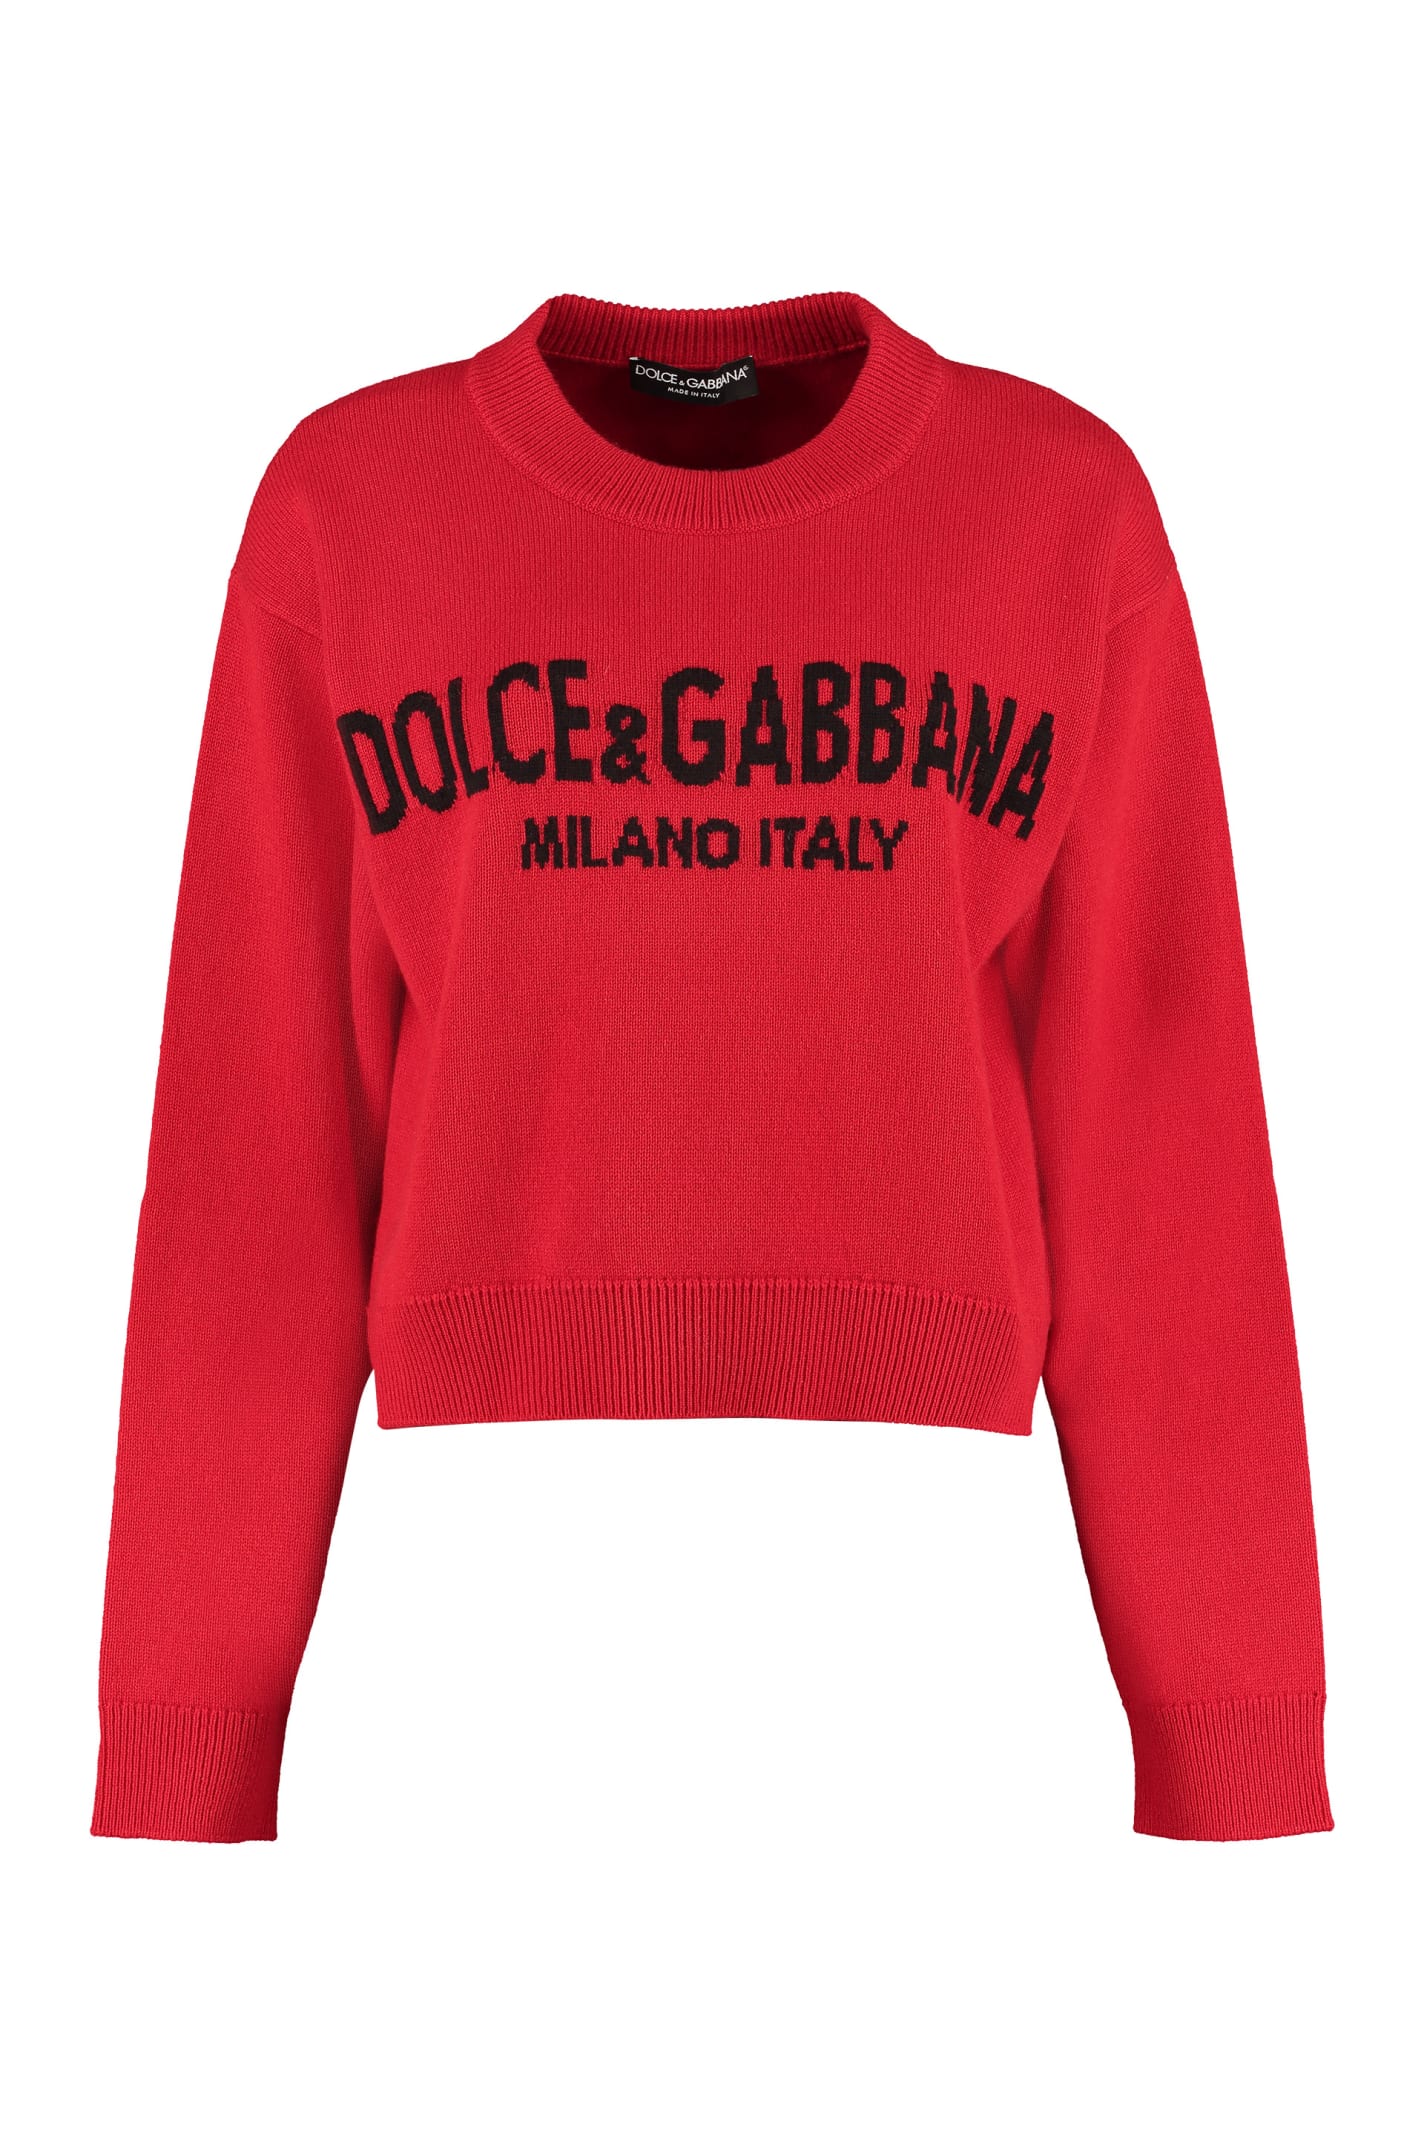 Dolce & Gabbana Crew-neck Cashmere Sweater